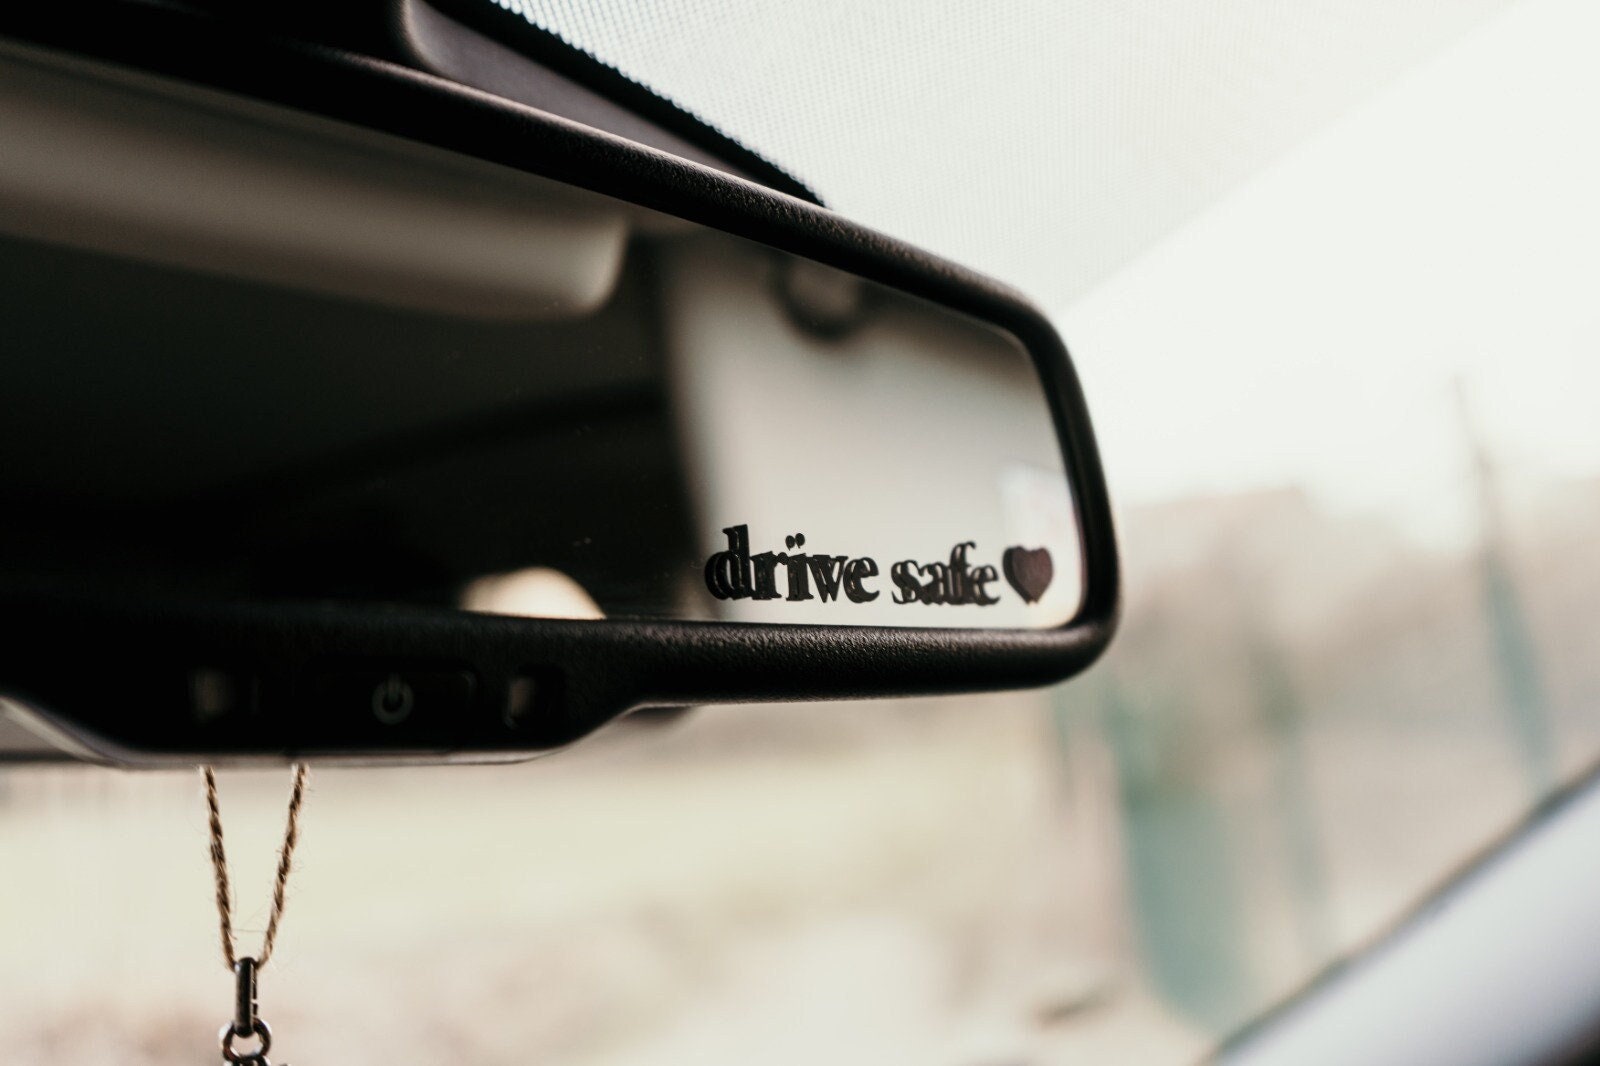 Kaufe Für Subaru XV 2011- 2018 Rückspiegel Film HD Anti-Fog Anti-Scratch  Regendicht Auto Spiegel Aufkleber Auto